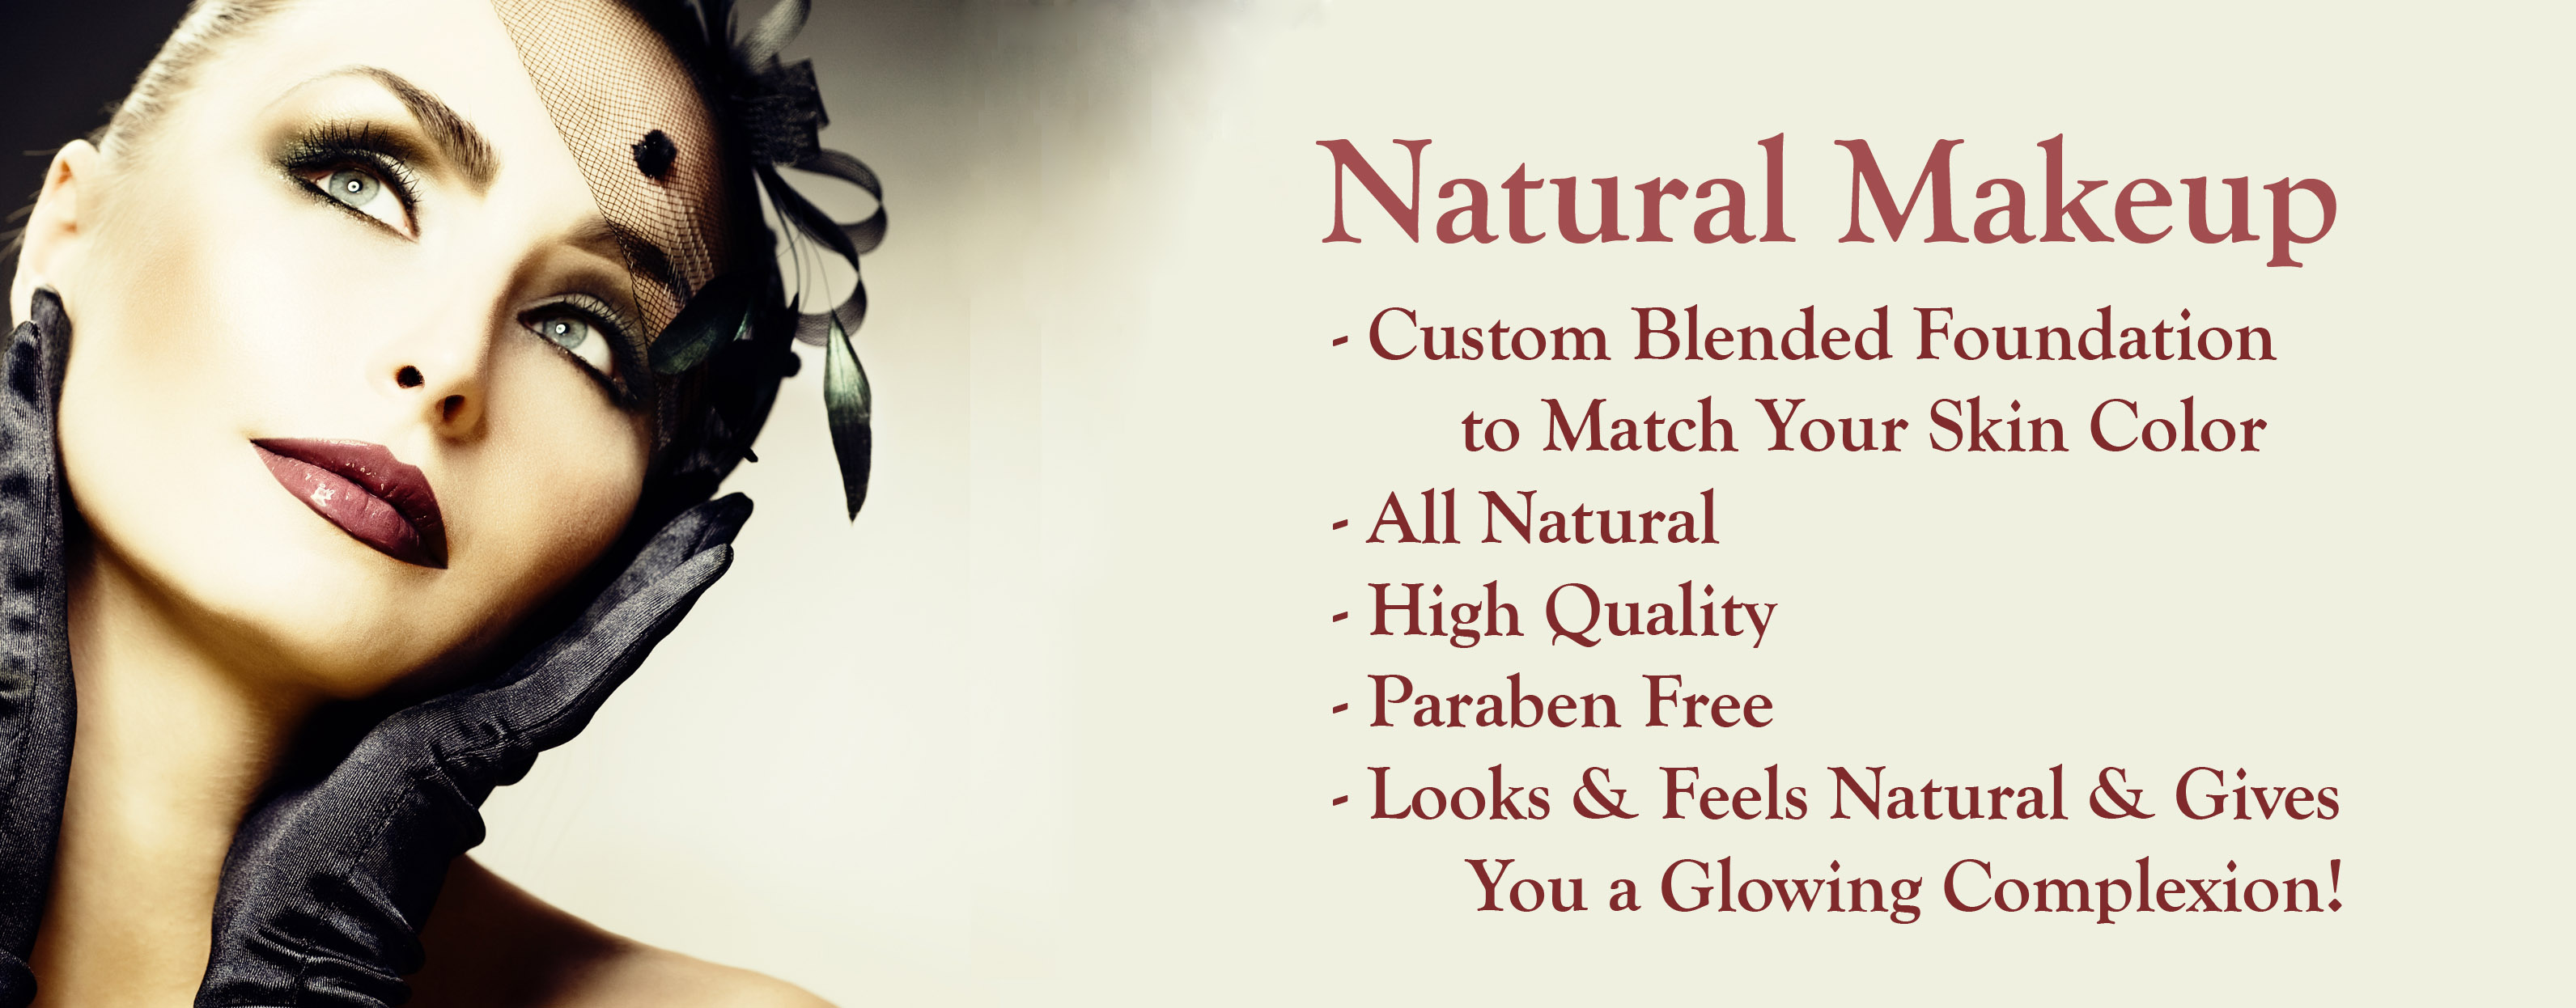 Natural makeup & Custom Blend foundation